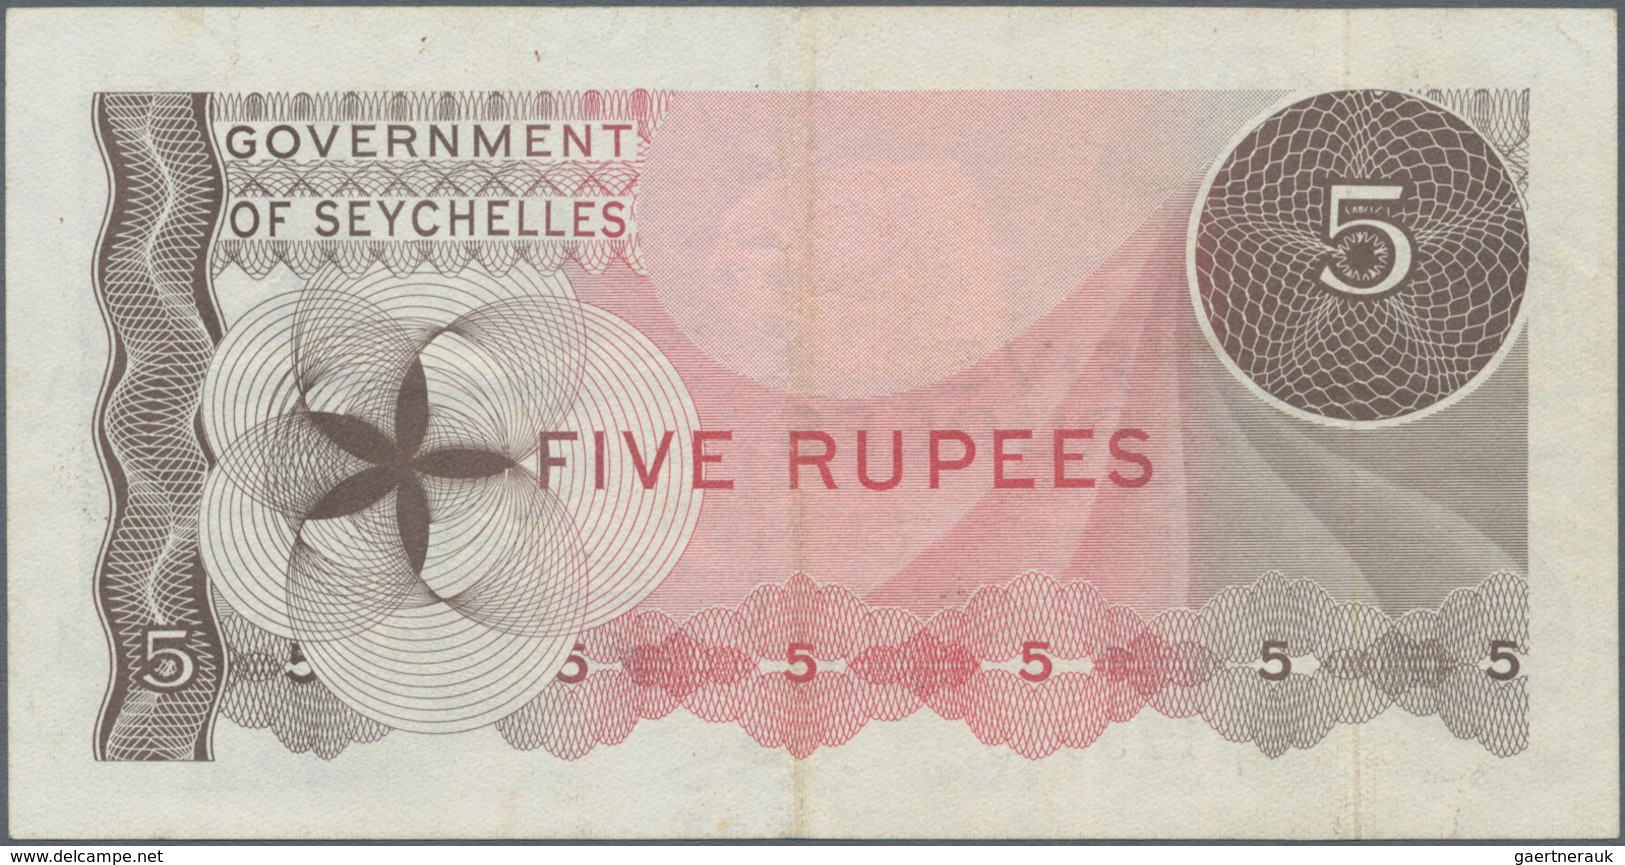 Seychelles / Seychellen: Government Of Seychelles 5 Rupees 1968, P.14, Very Popular Banknote In Nice - Seychellen